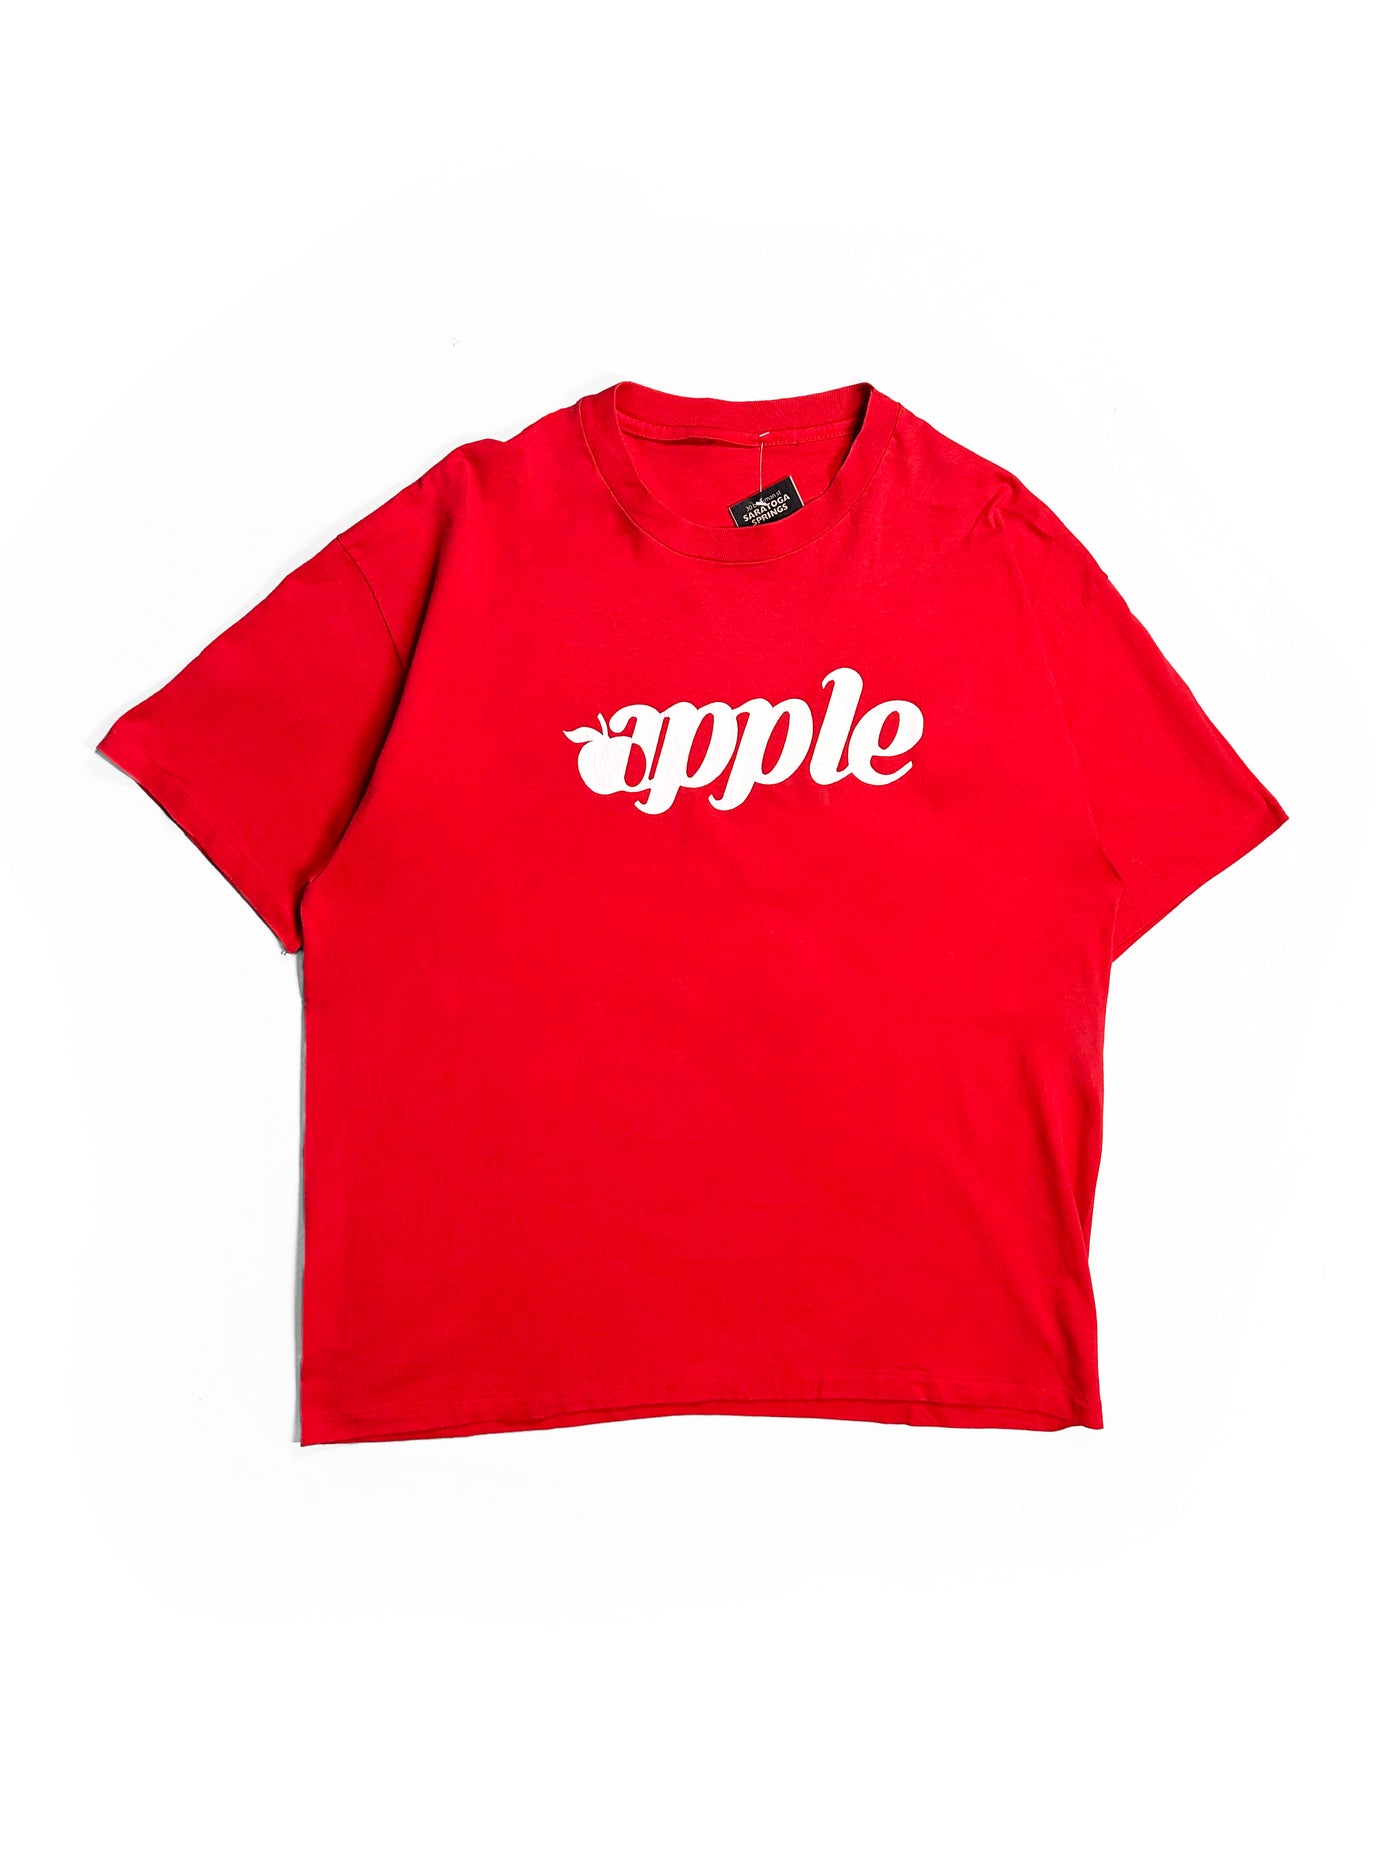 Vintage 90s Apple Spellout Promo T-Shirt